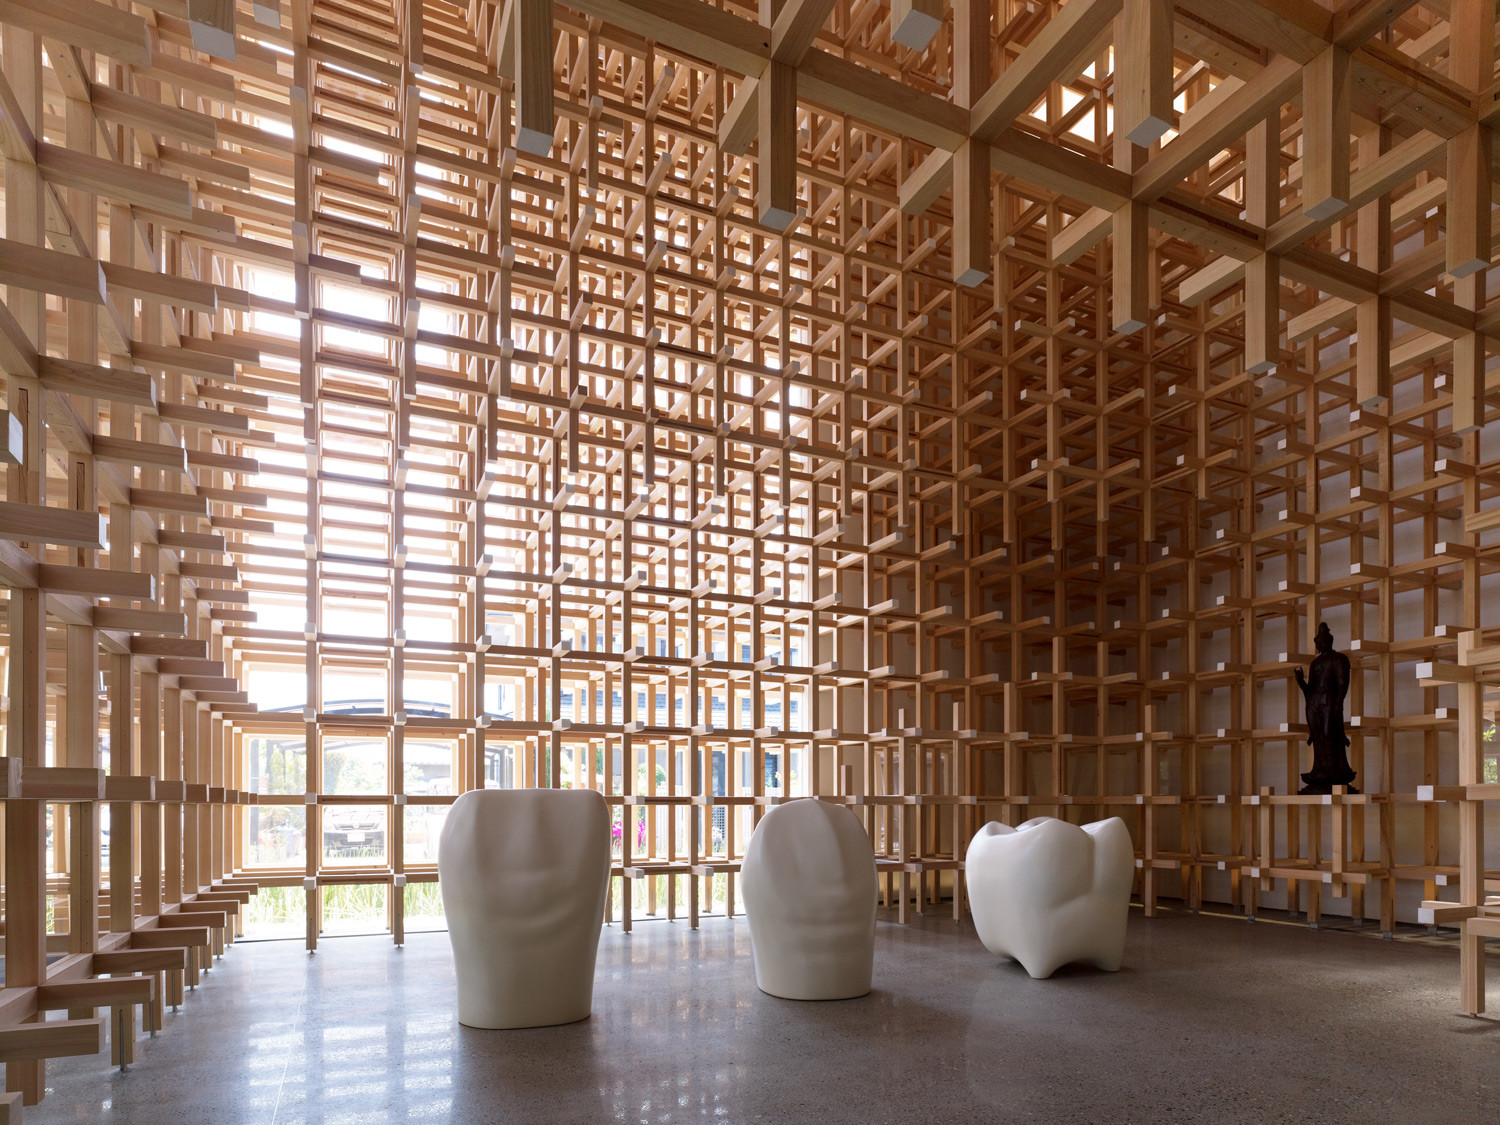 Meet the architects: Kengo Kuma | Blog | Royal Academy of Arts